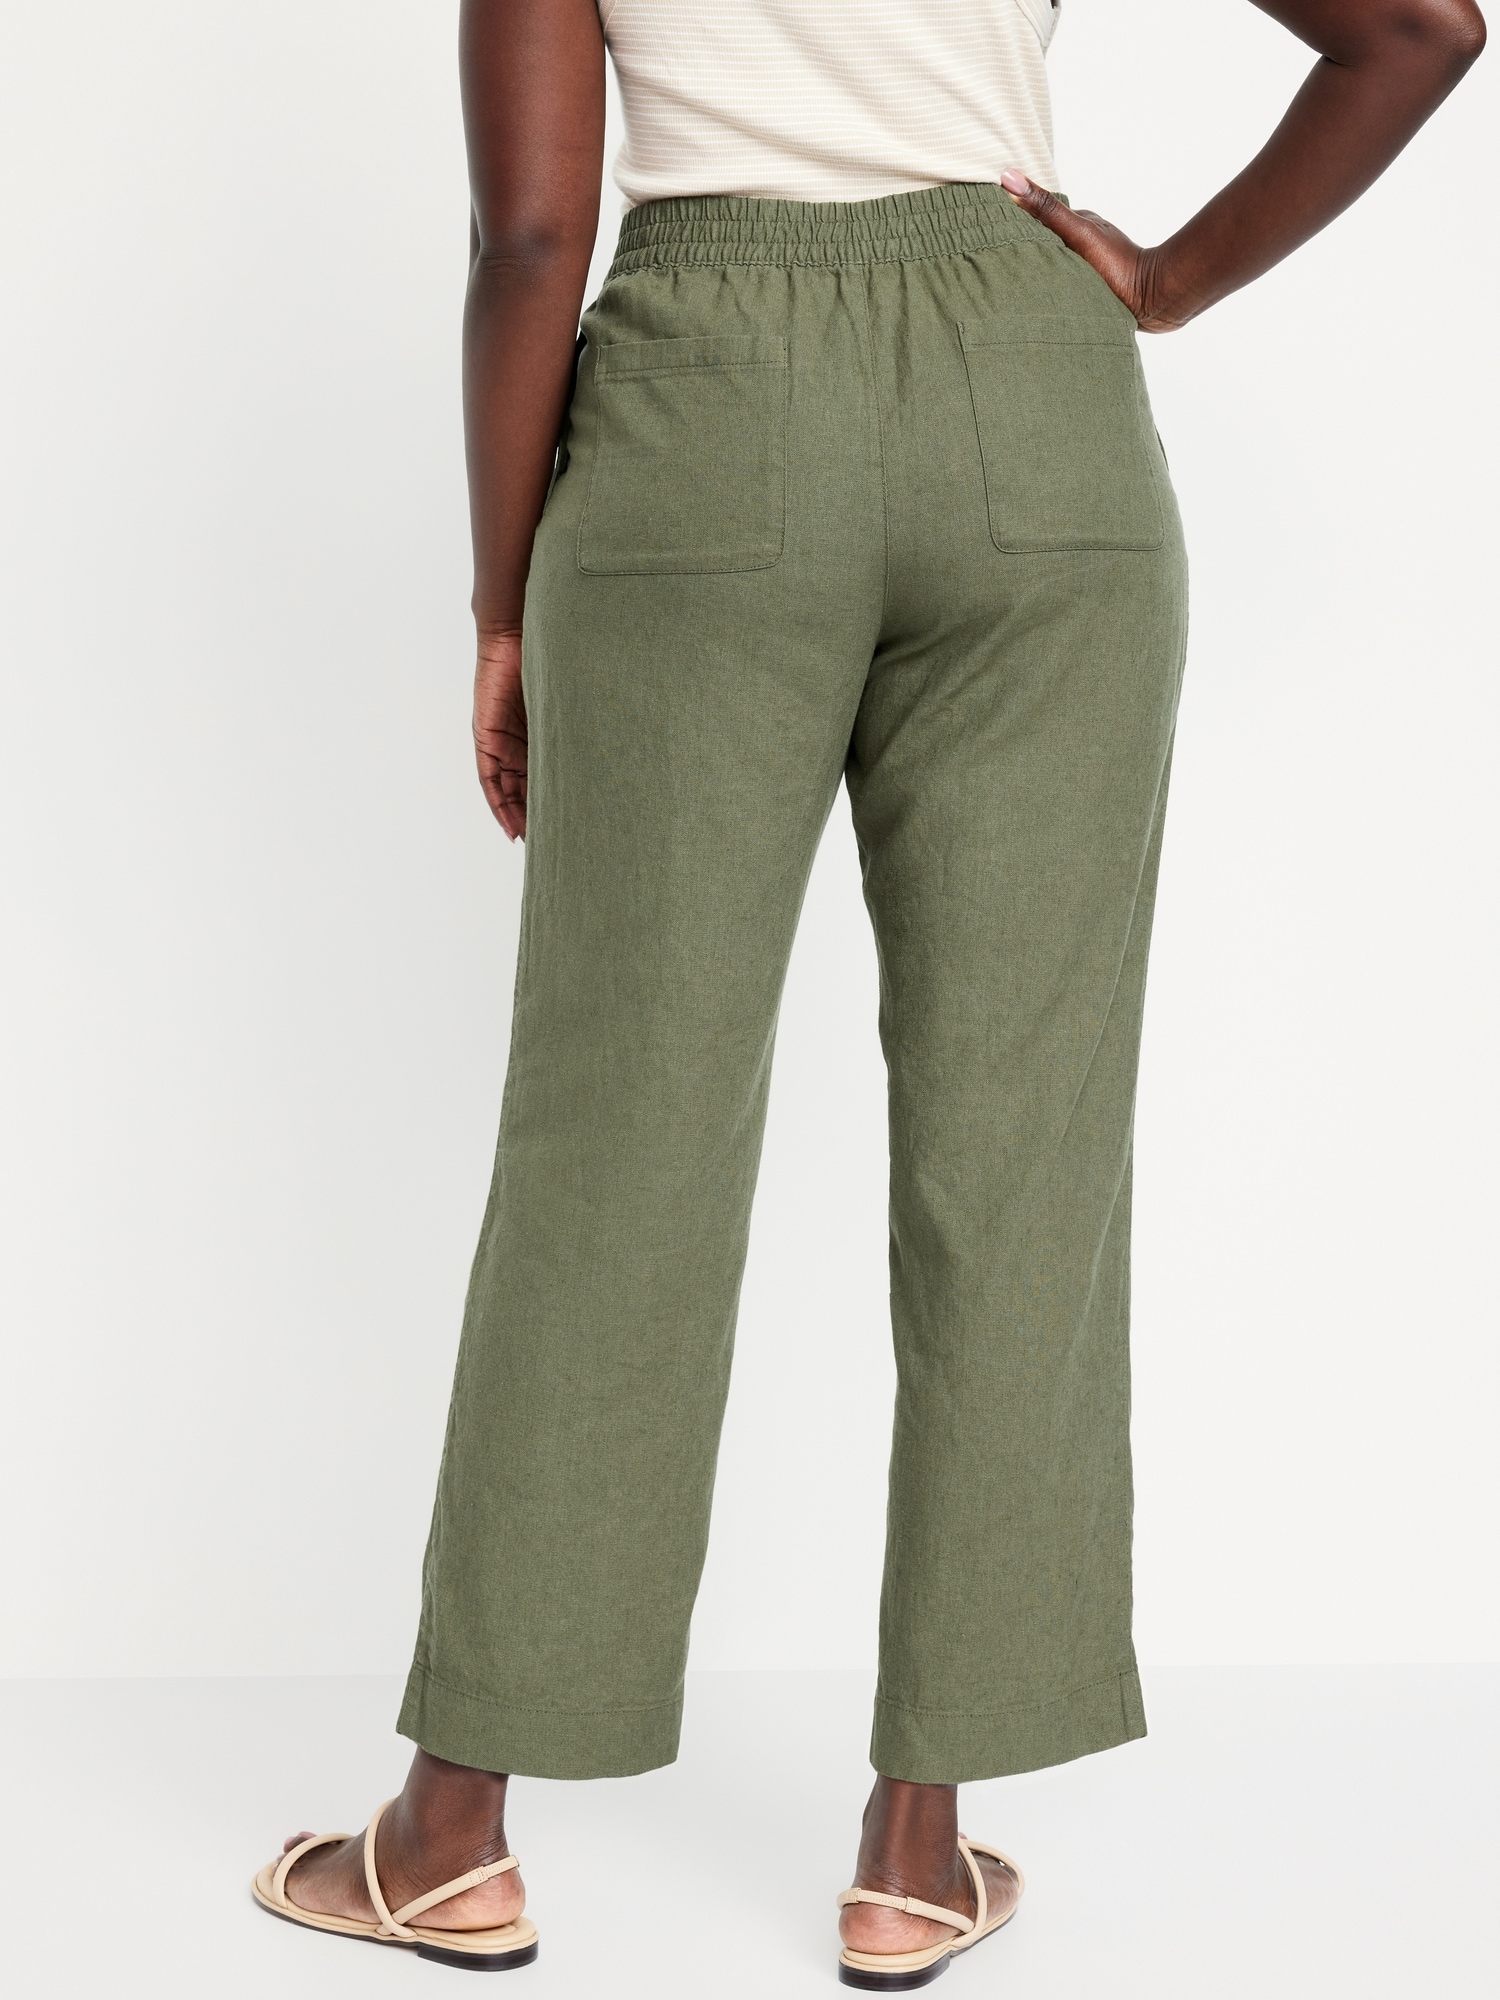 BINNY - LILLY PILLIES - Cotton/Linen Pants with Belt – Design